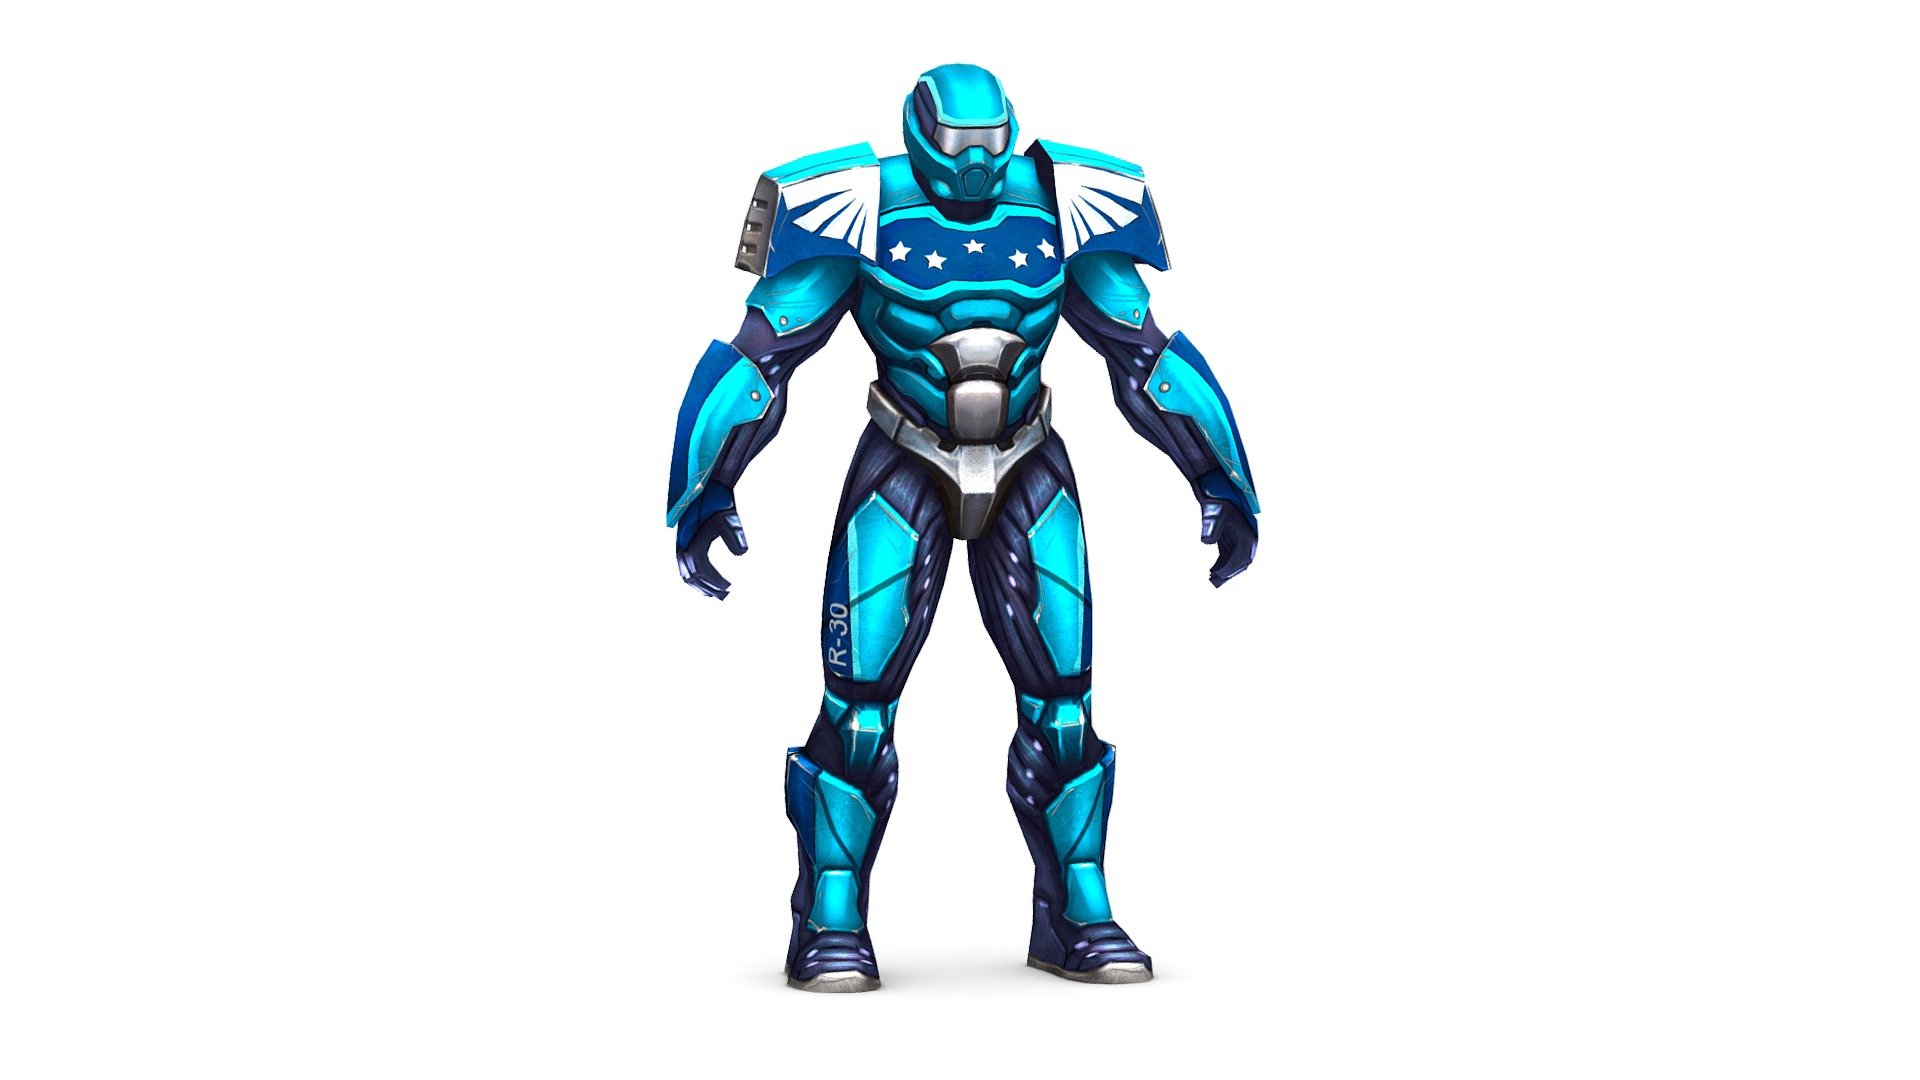 Low Poly Man Cyborg  Trooper Soldier  - 1024x1024 color texture only, no lights/ 3dsMax file included - Low Poly Man Cyborg  Trooper Soldier - Buy Royalty Free 3D model by Oleg Shuldiakov (@olegshuldiakov) 3d model